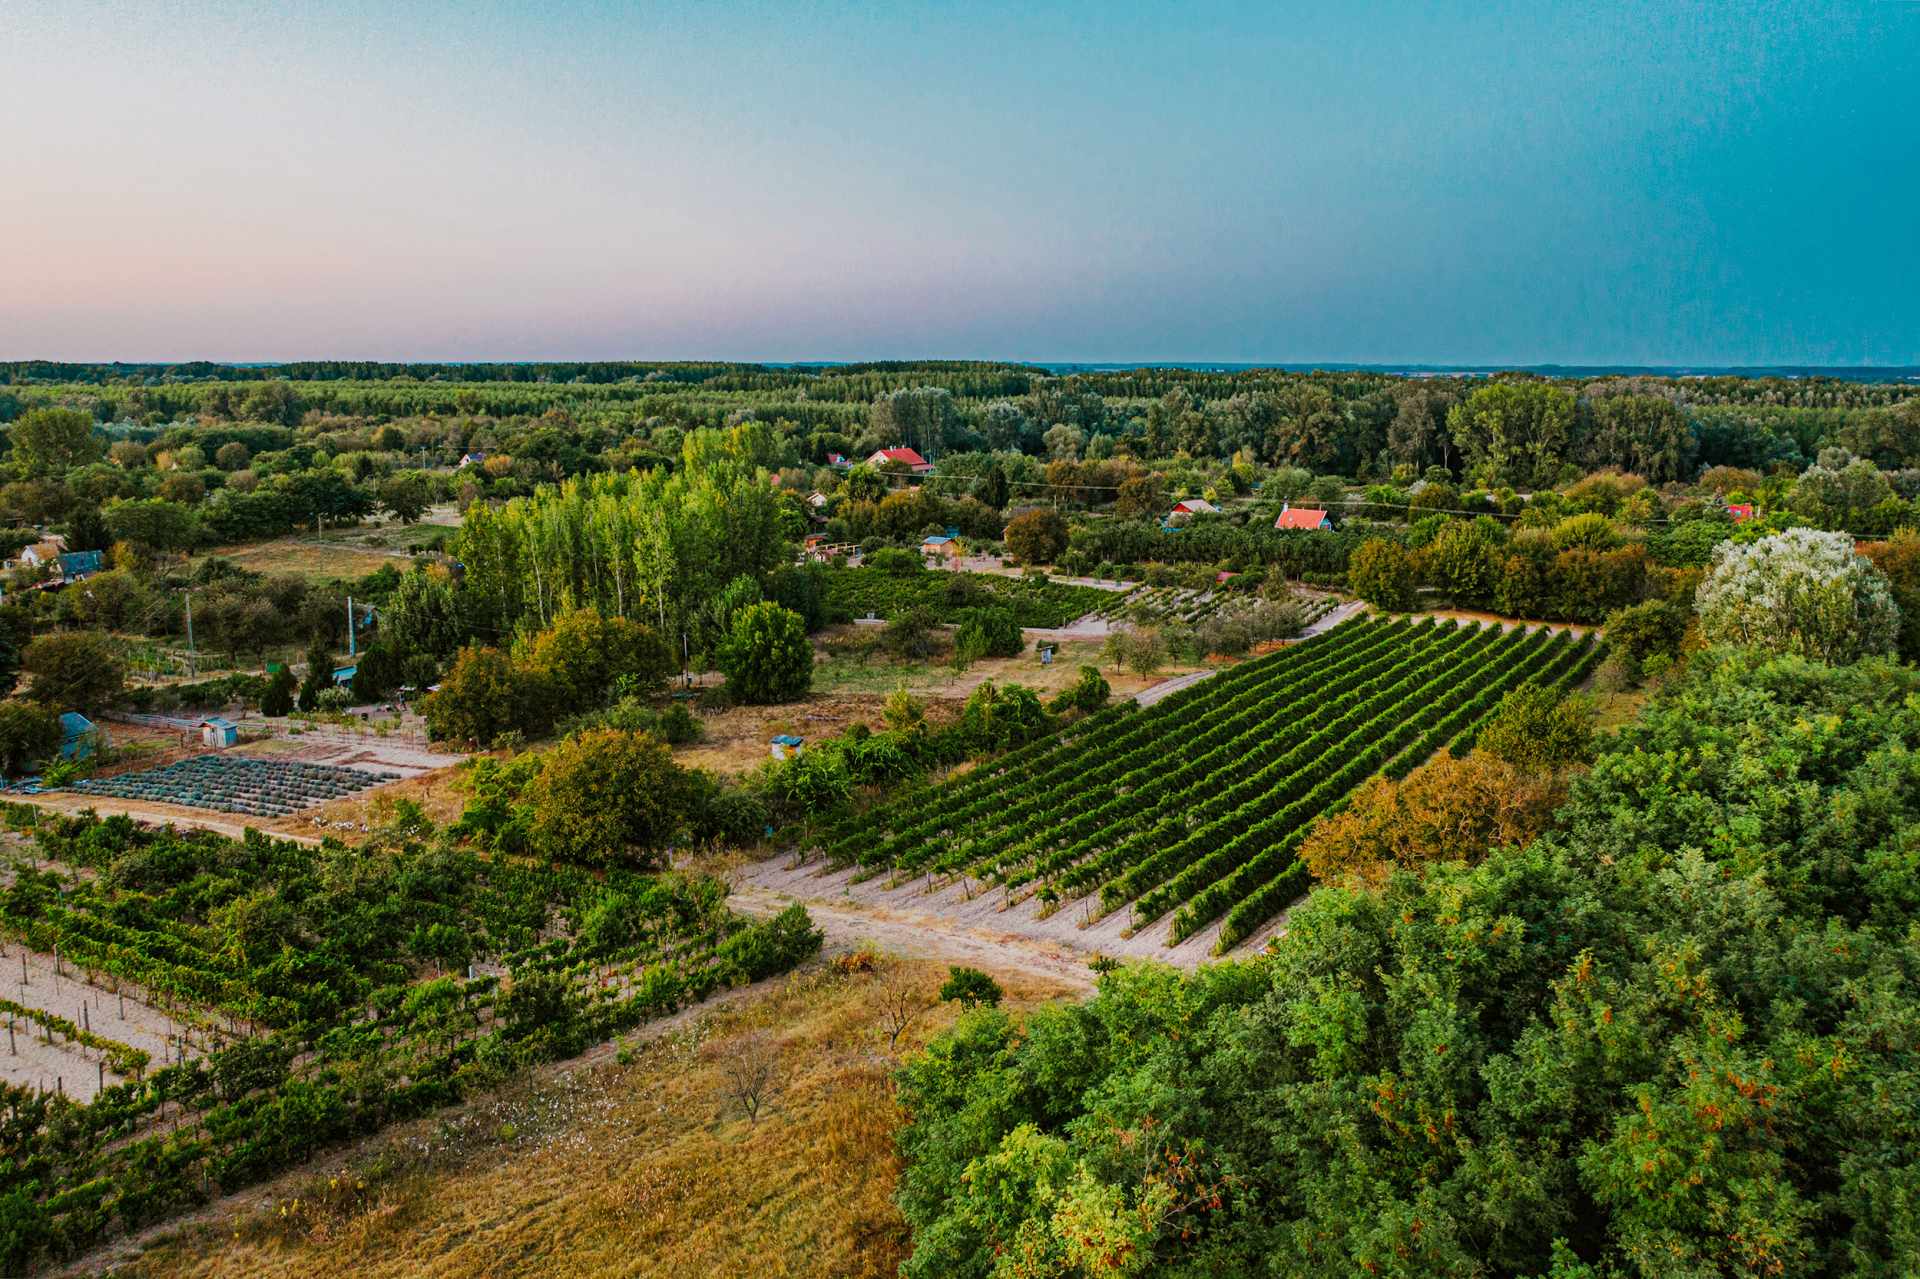 Csongrád Wine District